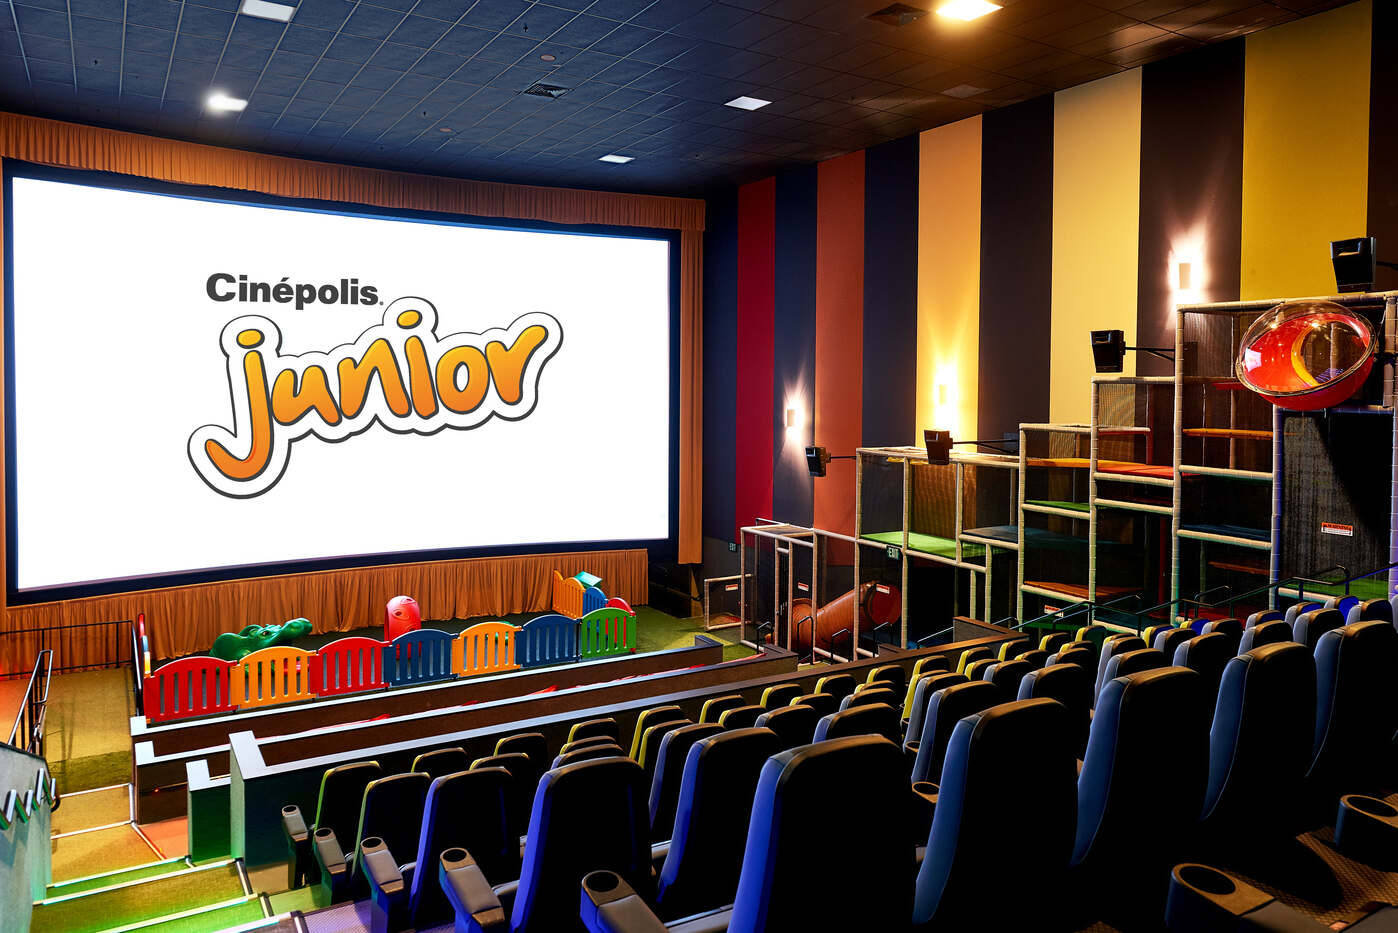 free internet dating (san diego) movie theater